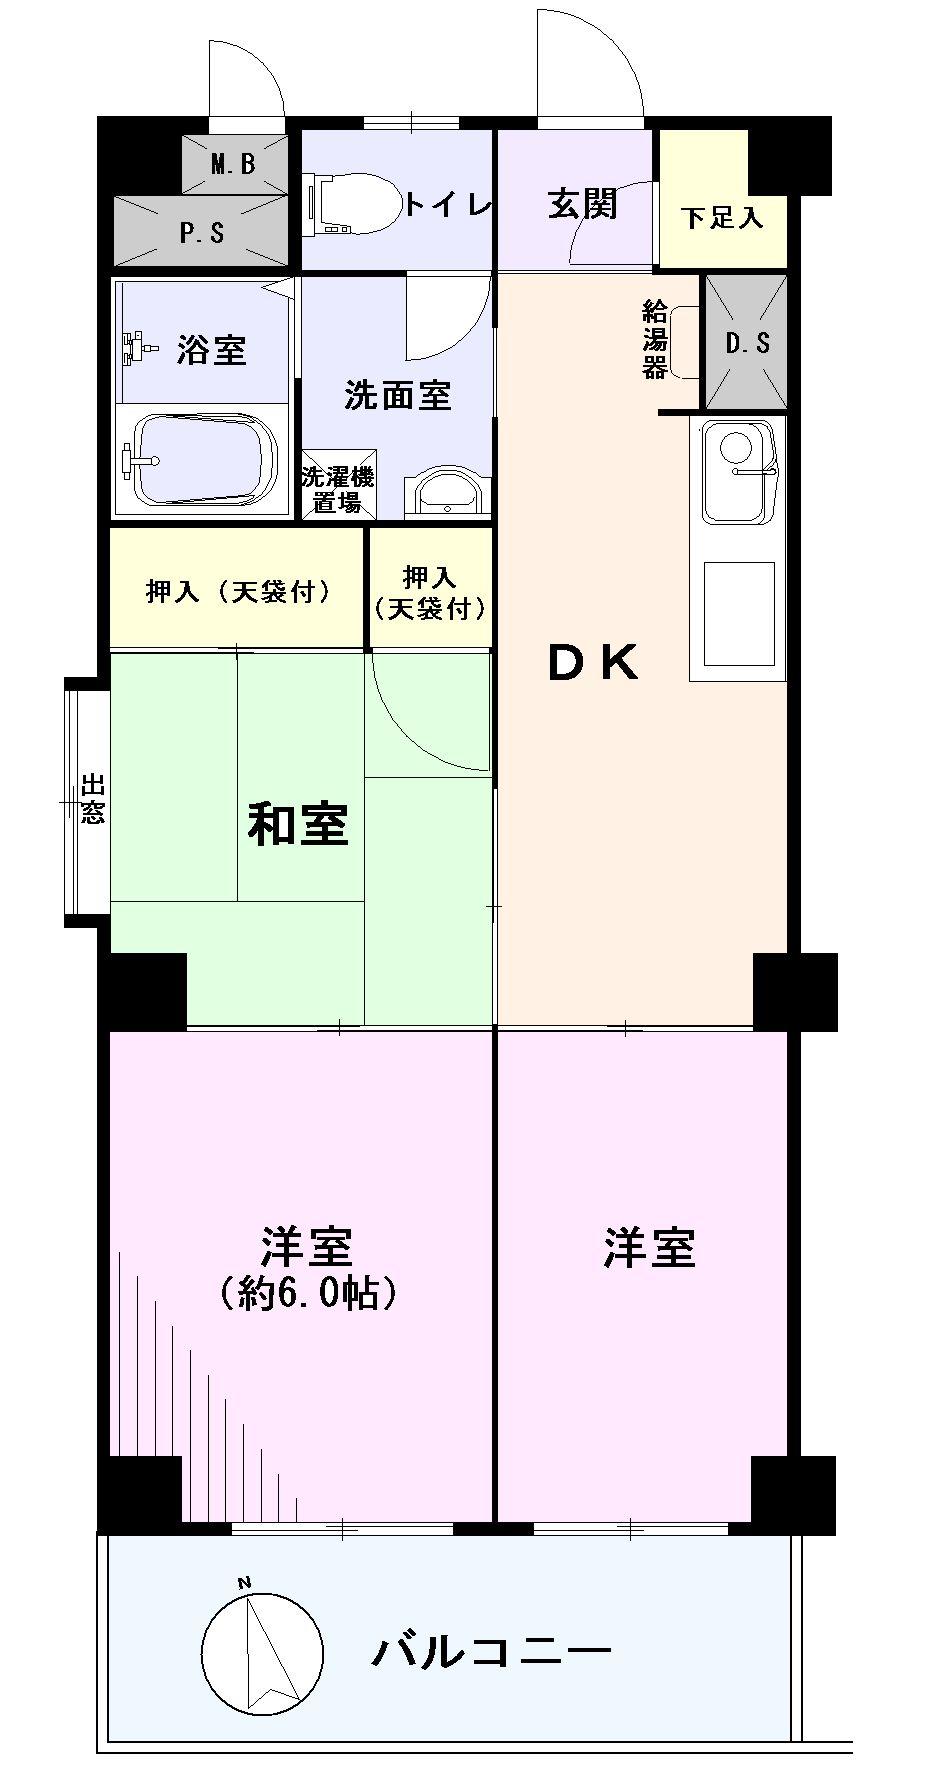 Floor plan. 3DK, Price 20.8 million yen, Footprint 48 sq m , Balcony area 6.82 sq m